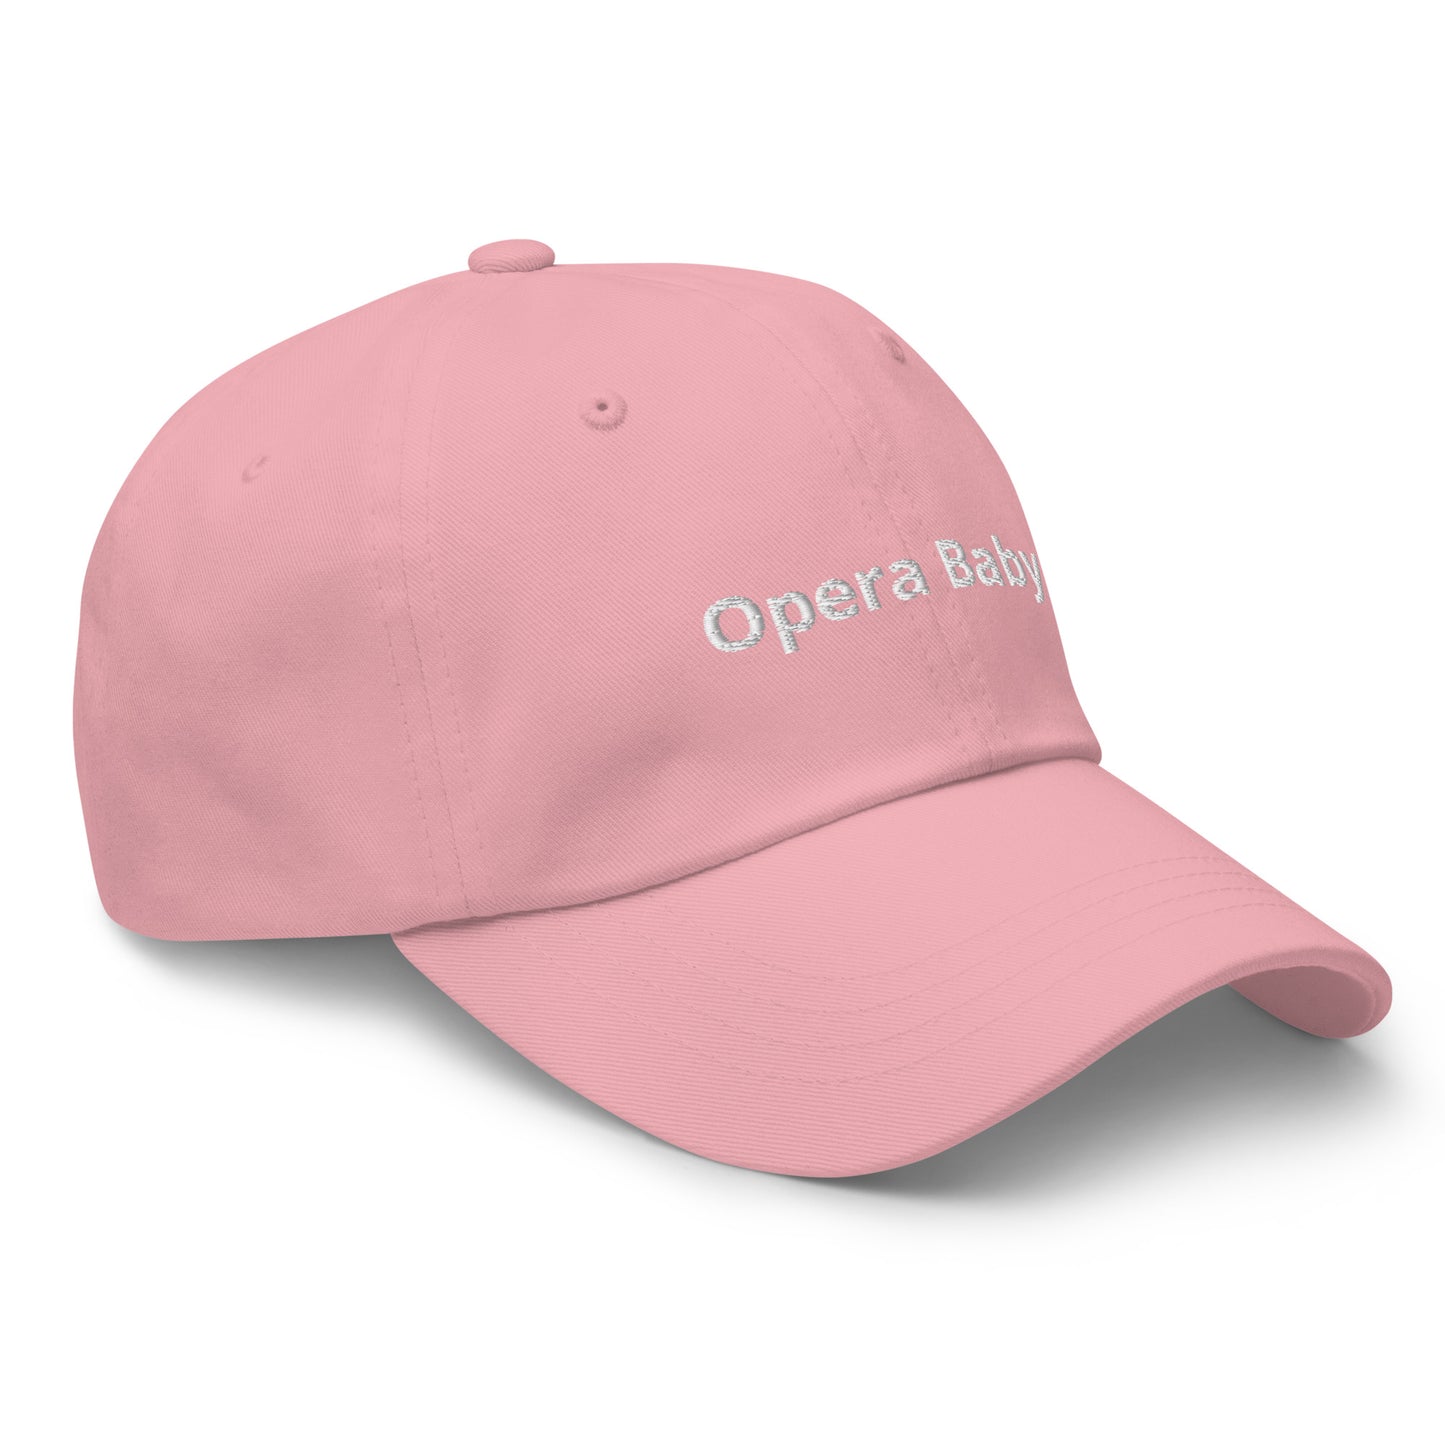 Opera Baby Hat